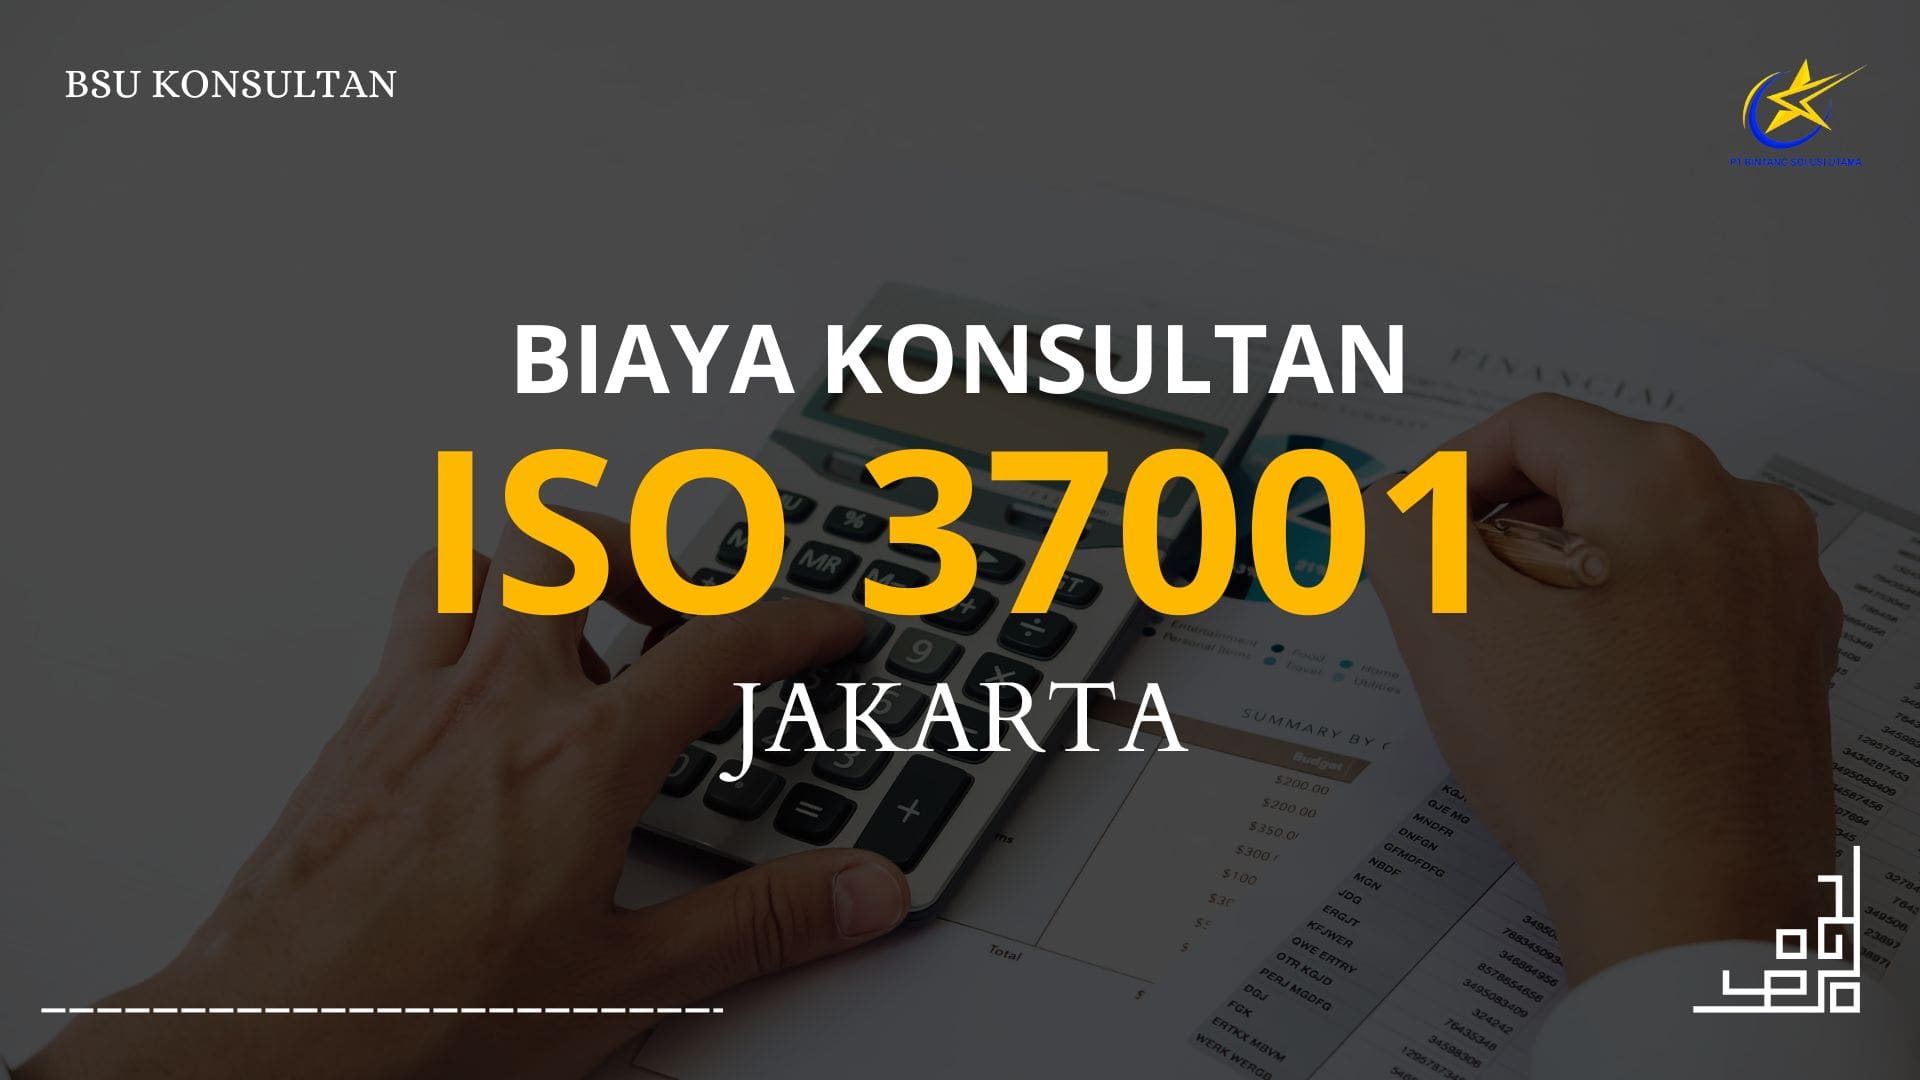 Biaya Konsultan ISO 37001 Jakarta